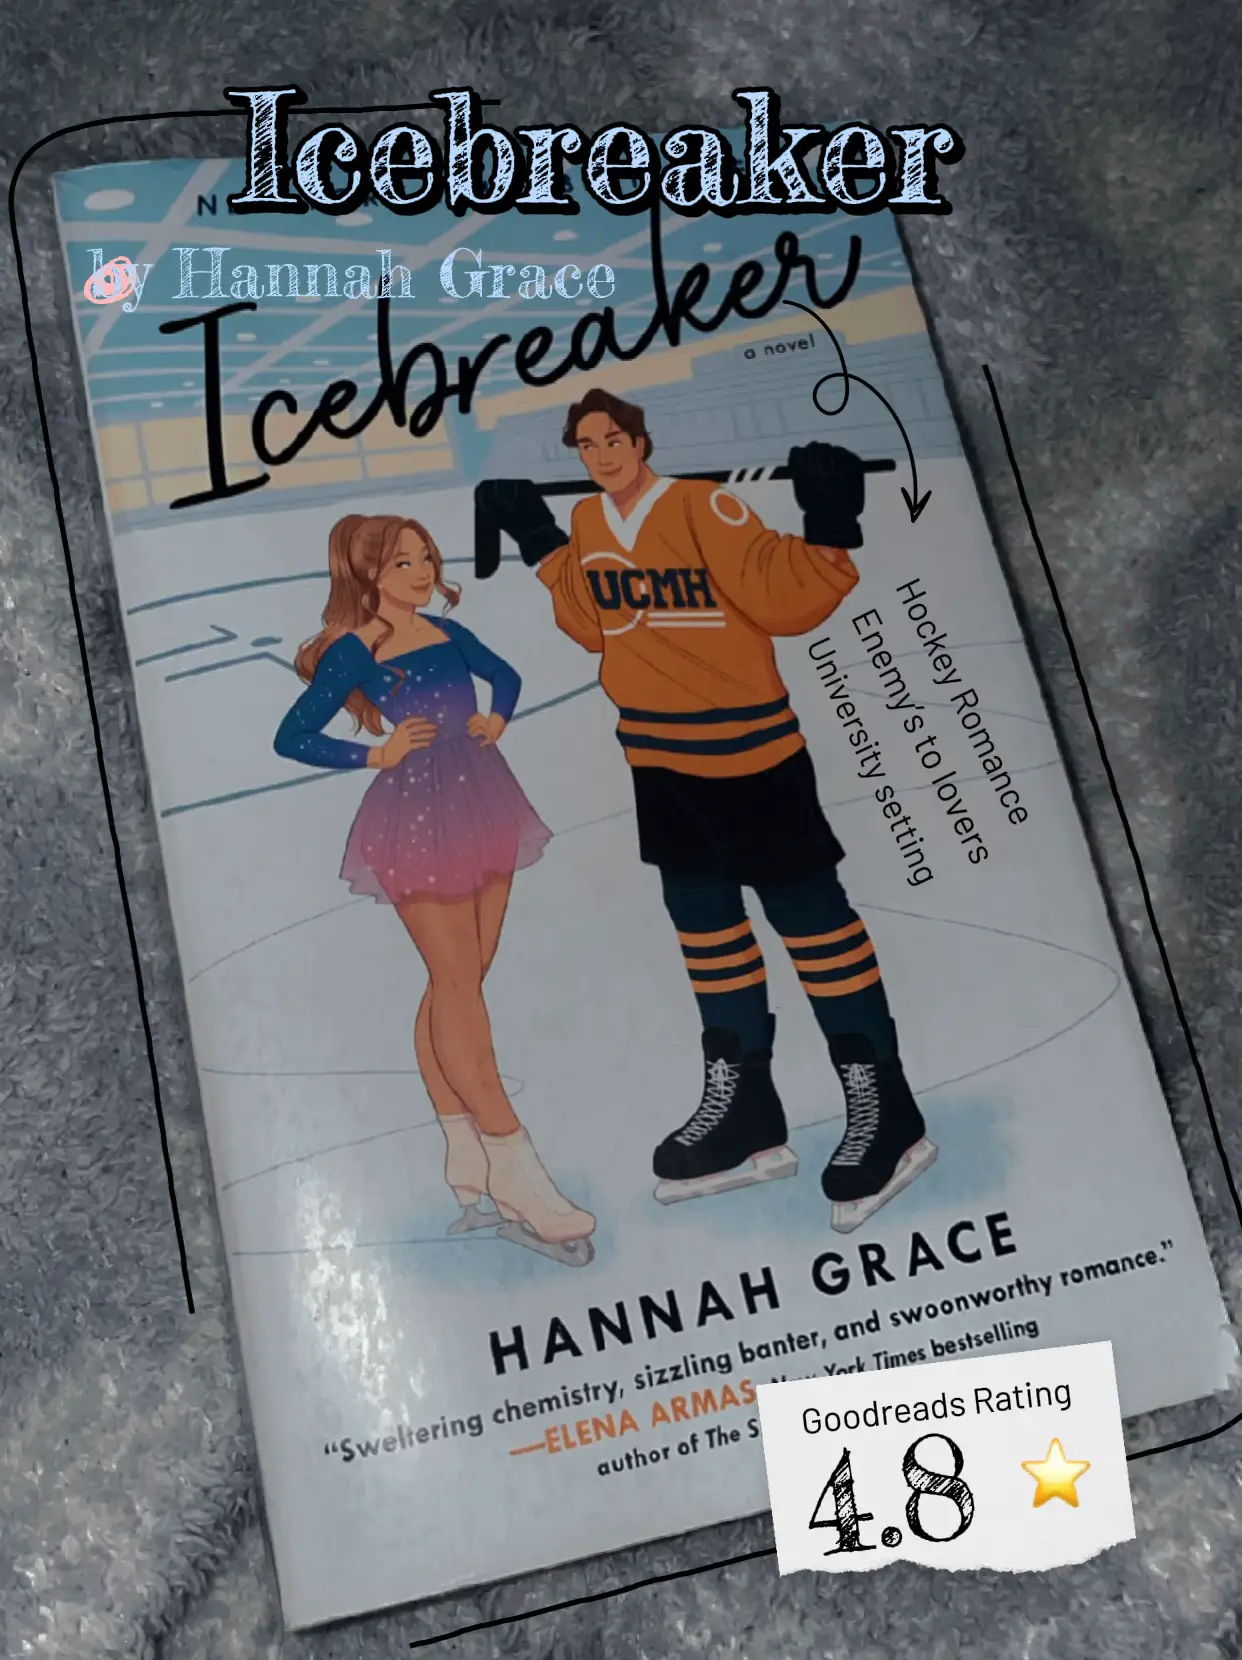 Icebreaker novel by Hannah Grace - Lemon8 Search